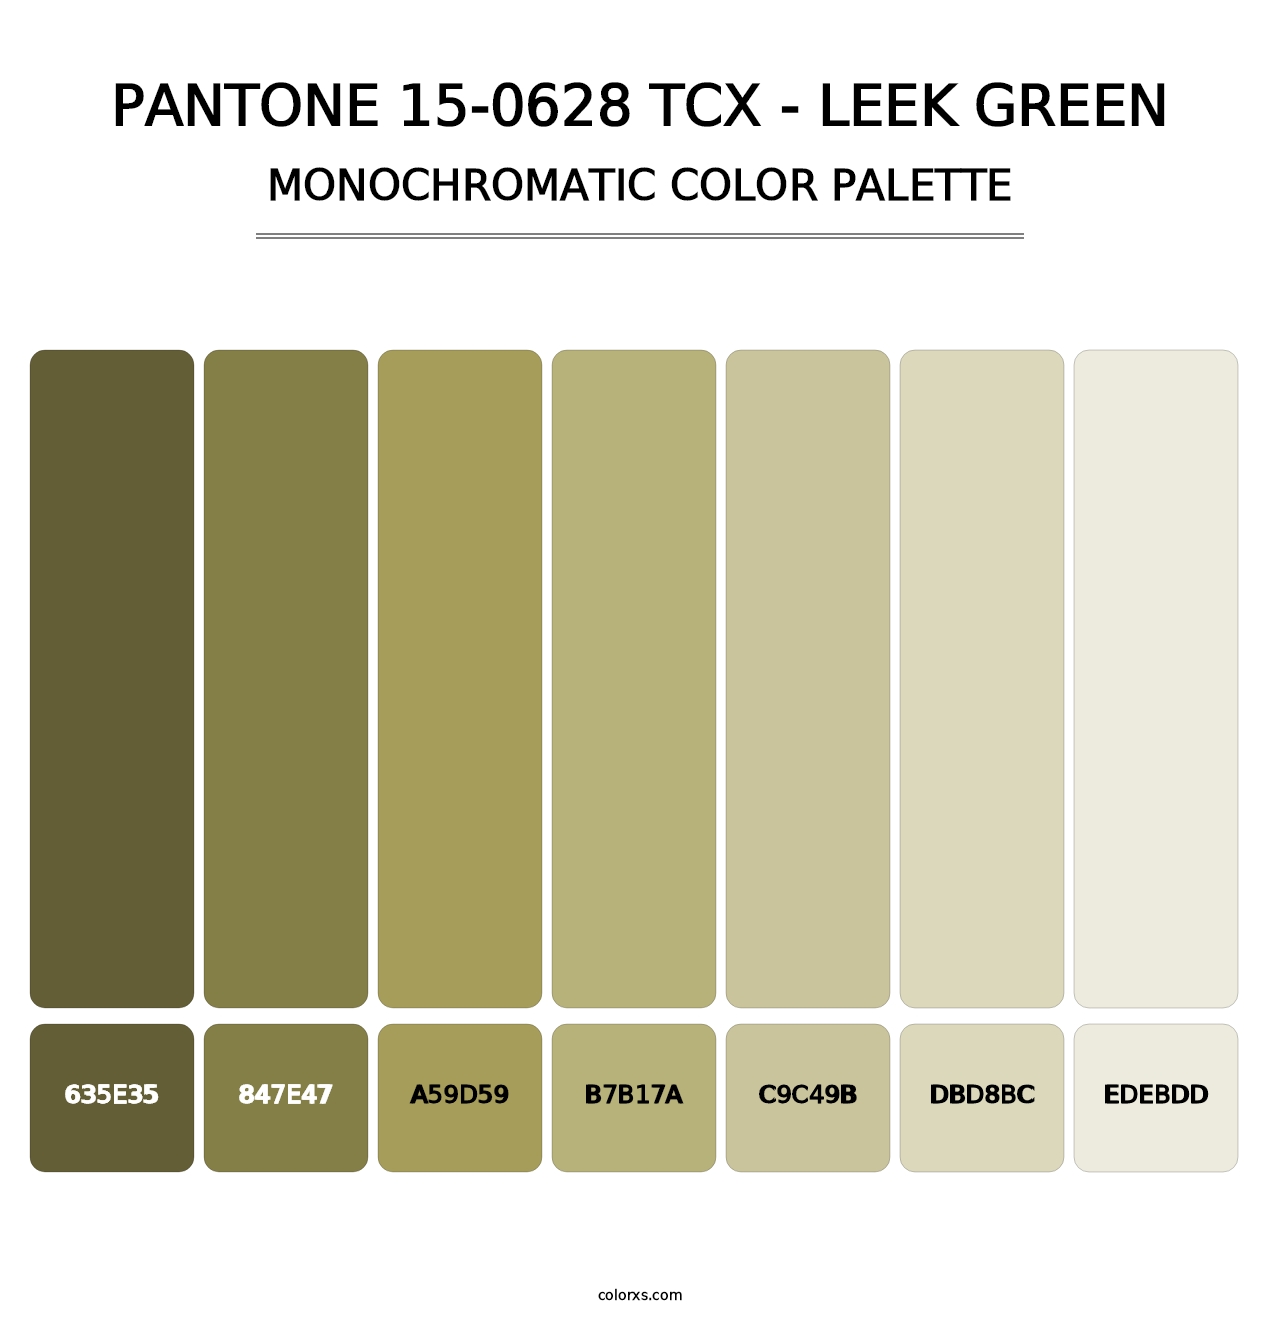 PANTONE 15-0628 TCX - Leek Green - Monochromatic Color Palette